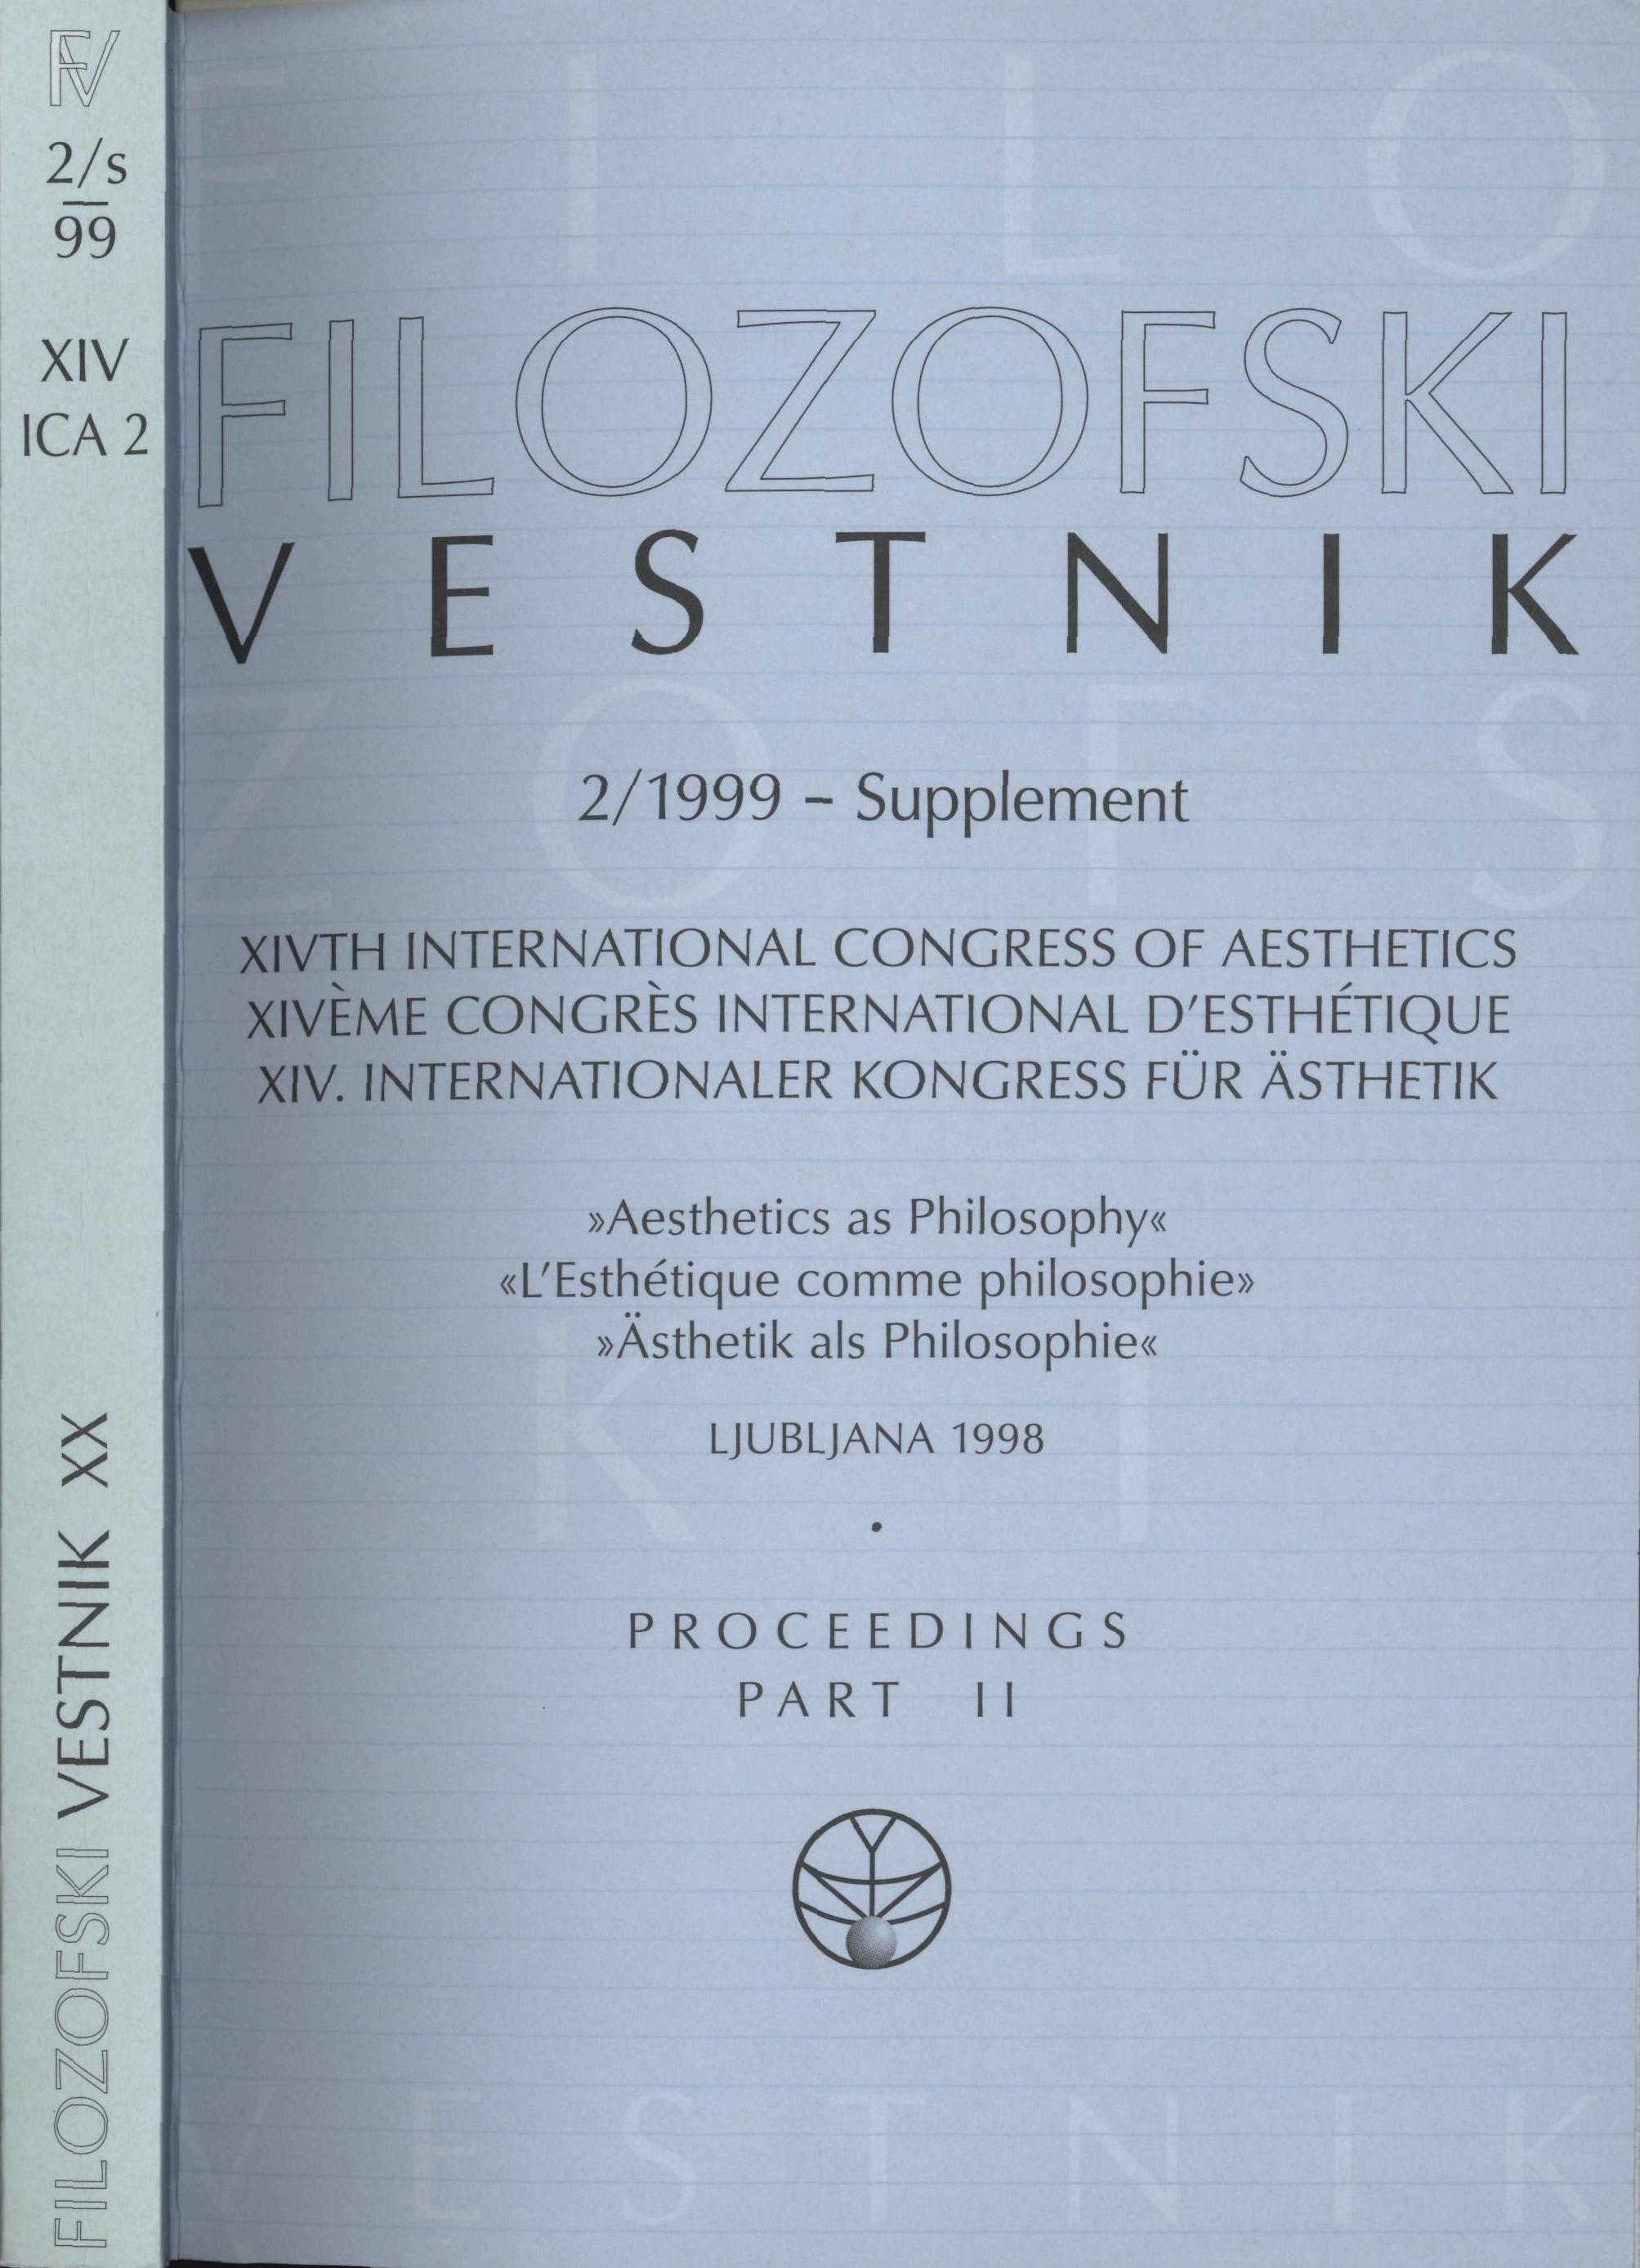 					Poglej Letn. 20 Št. 2/s (1999): XIVth International Congress of Aesthetics, "Aesthetics as Philosophy", Proceedings, Part II
				